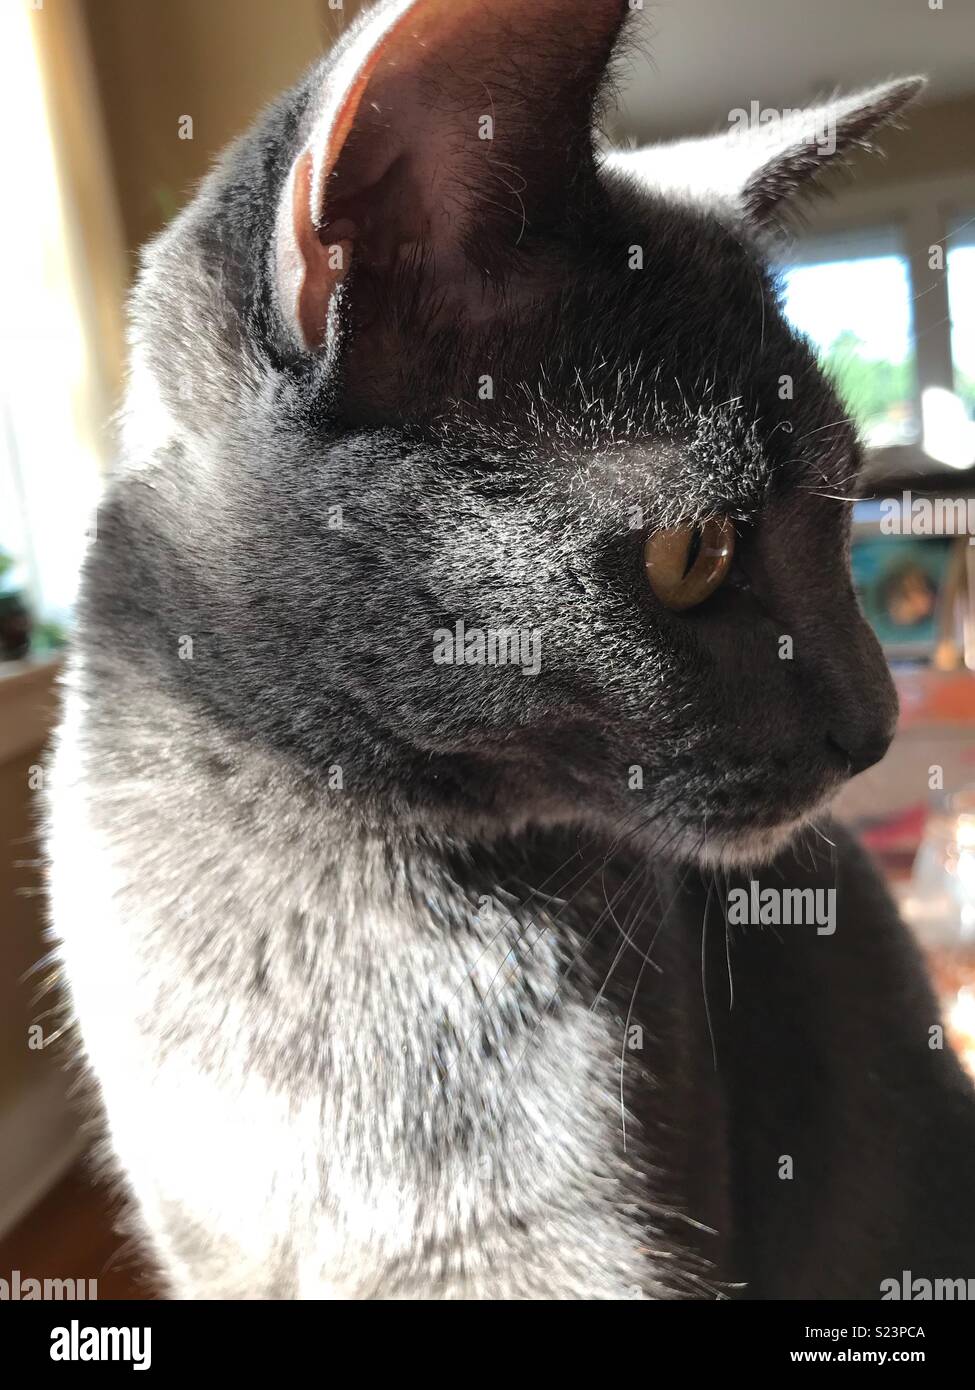 Cat in sun Stock Photo